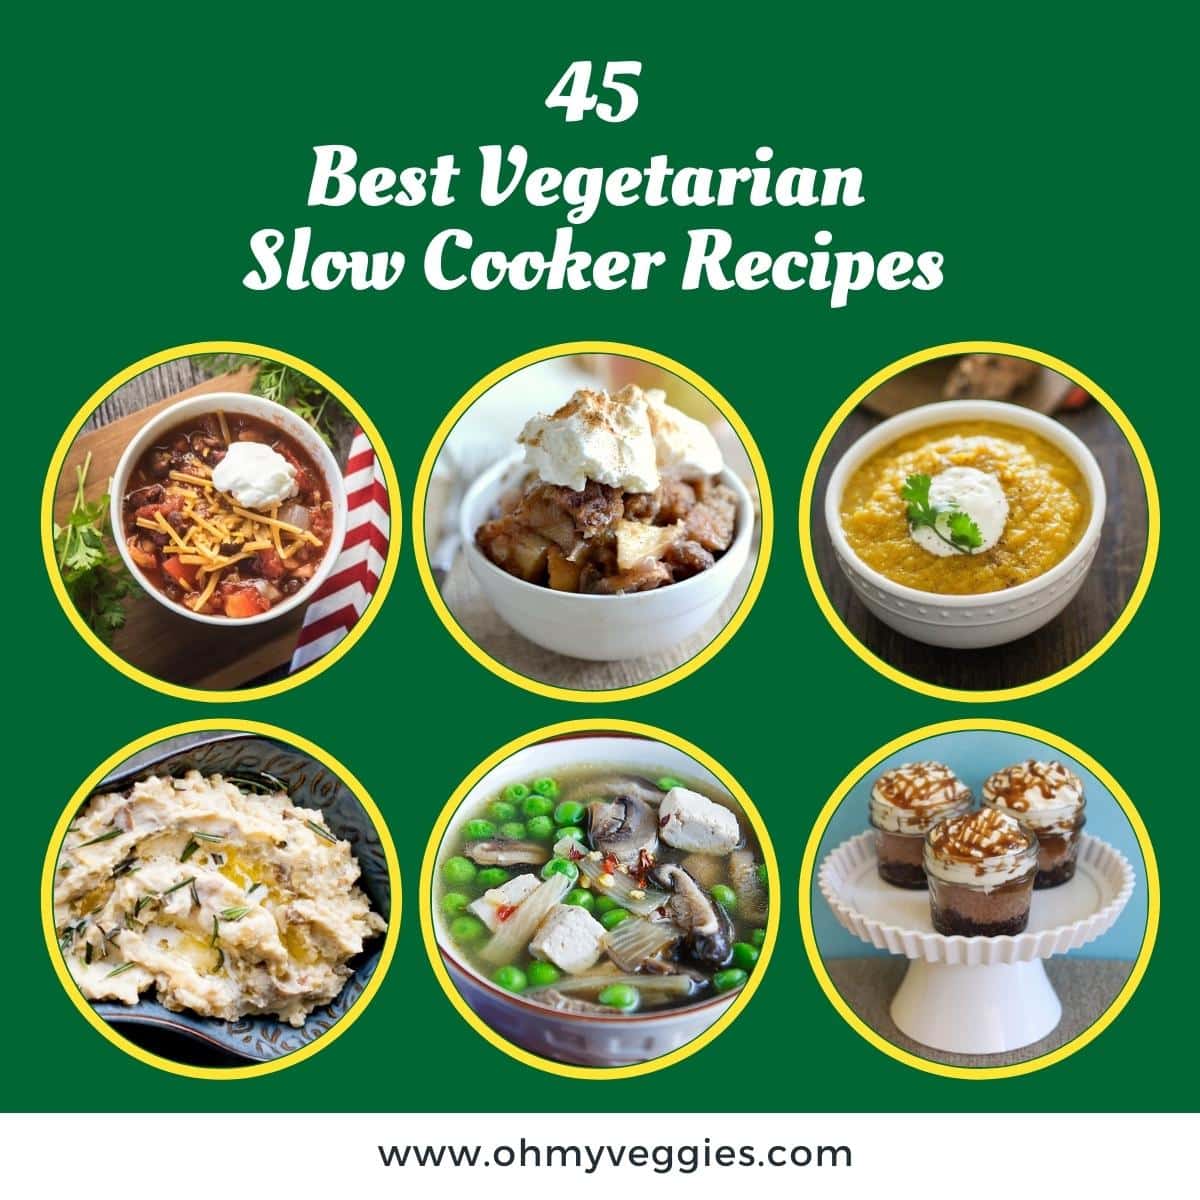 Best Vegetarian Slow Cooker Recipes